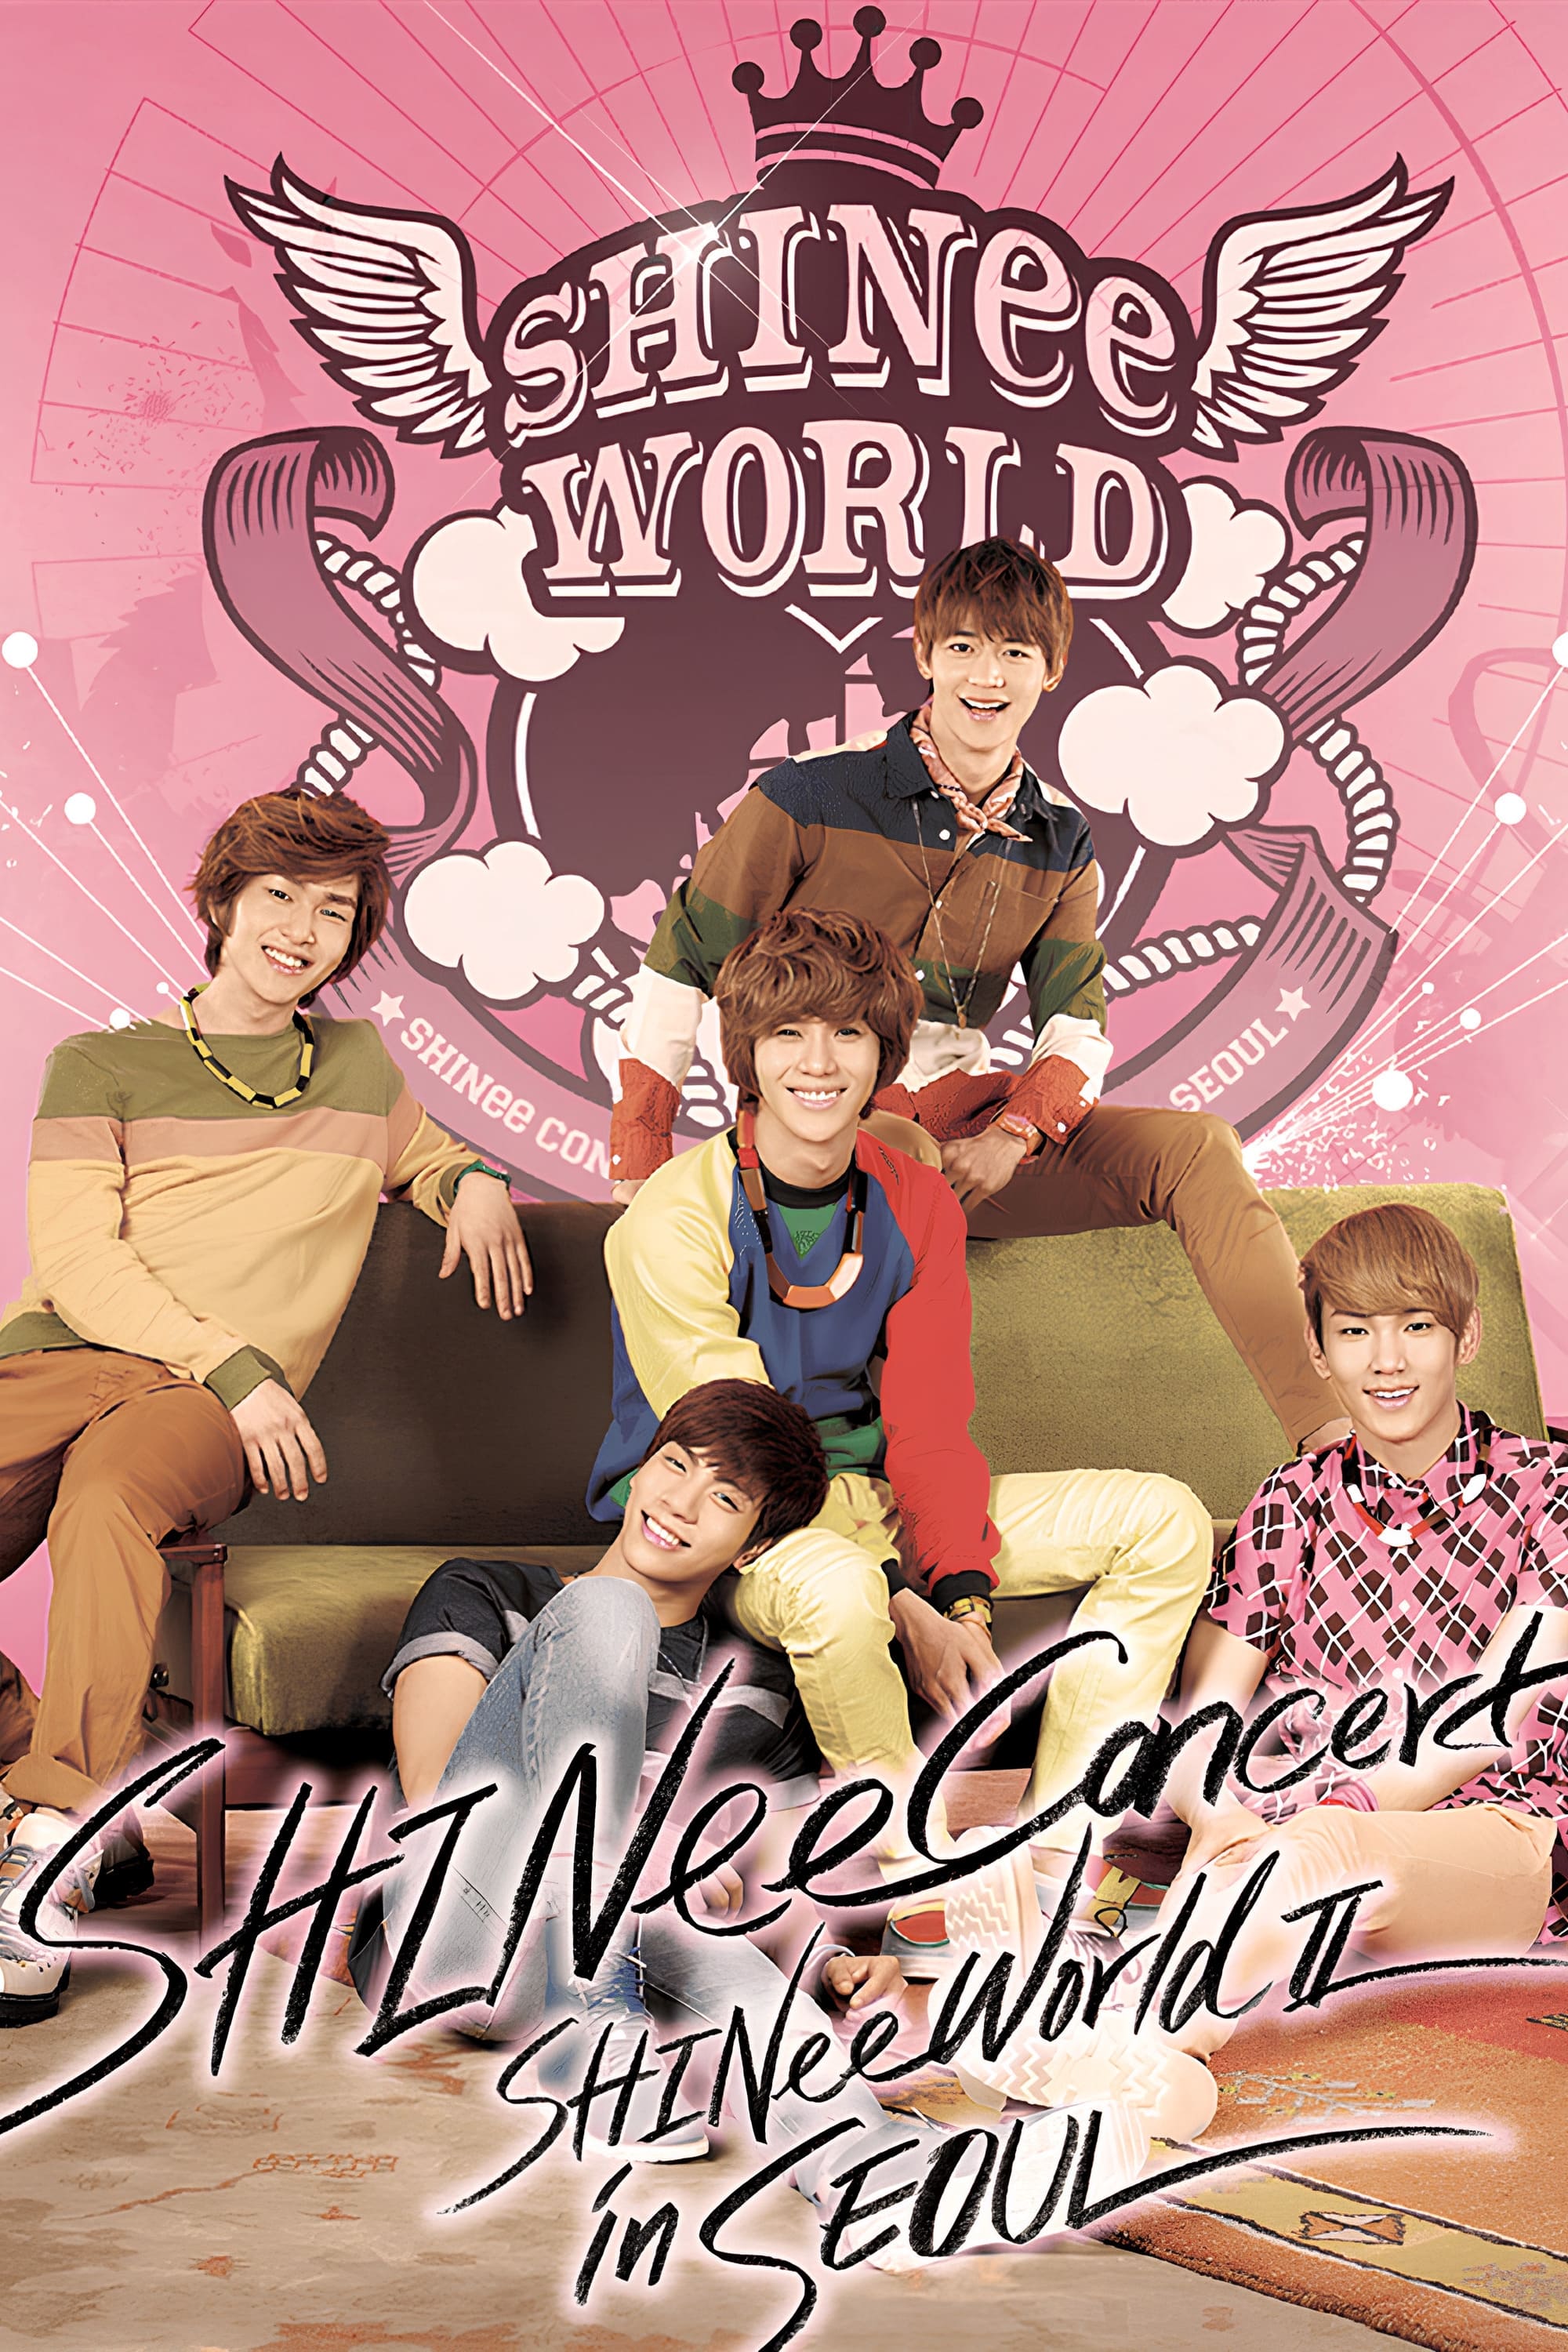 SHINee CONCERT "SHINee WORLD II"